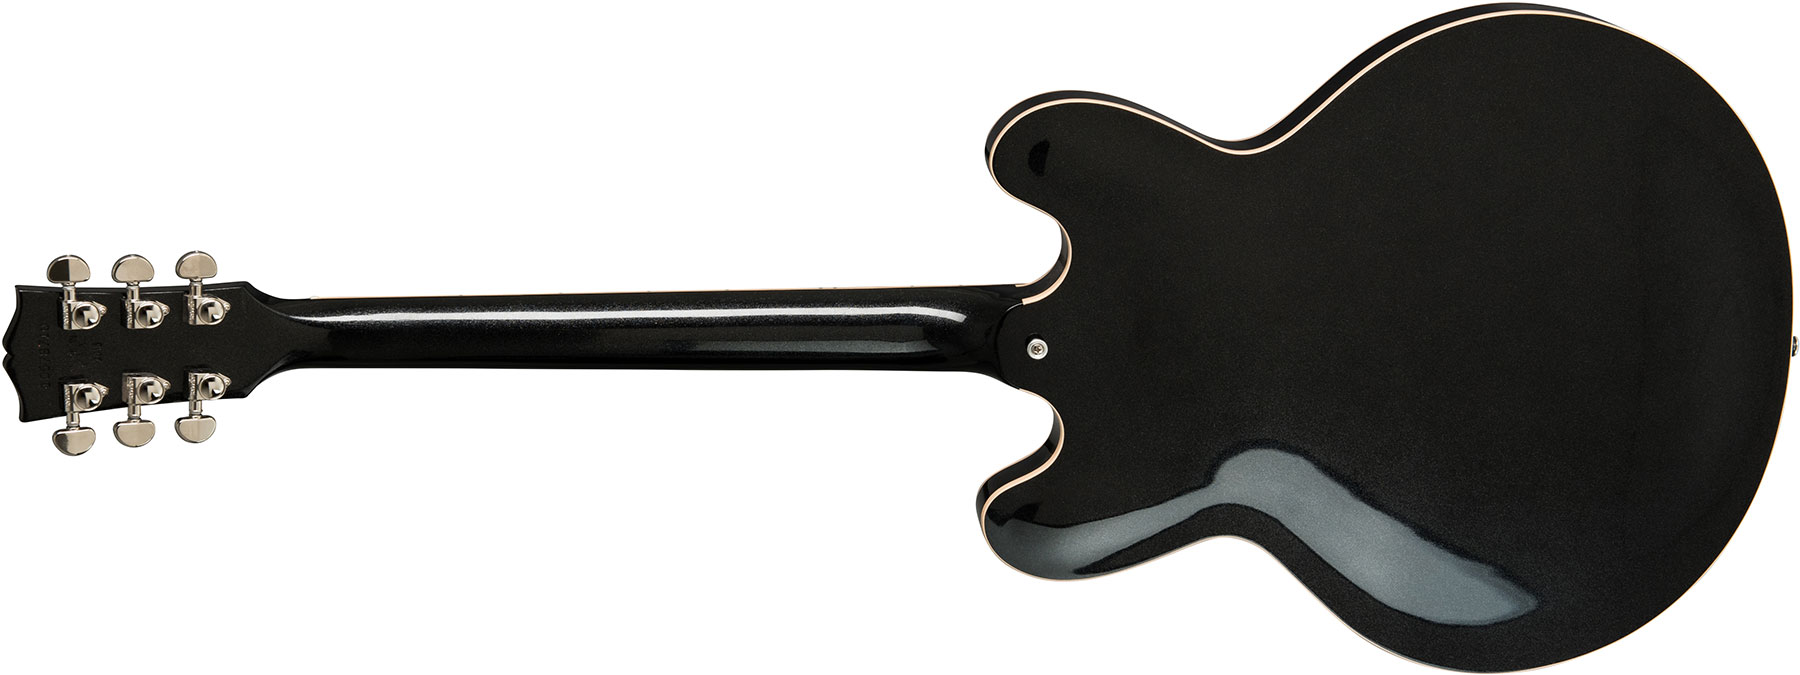 Gibson Es-335 Dot 2019 Hh Ht Rw - Graphite Metallic - Semi-hollow electric guitar - Variation 2